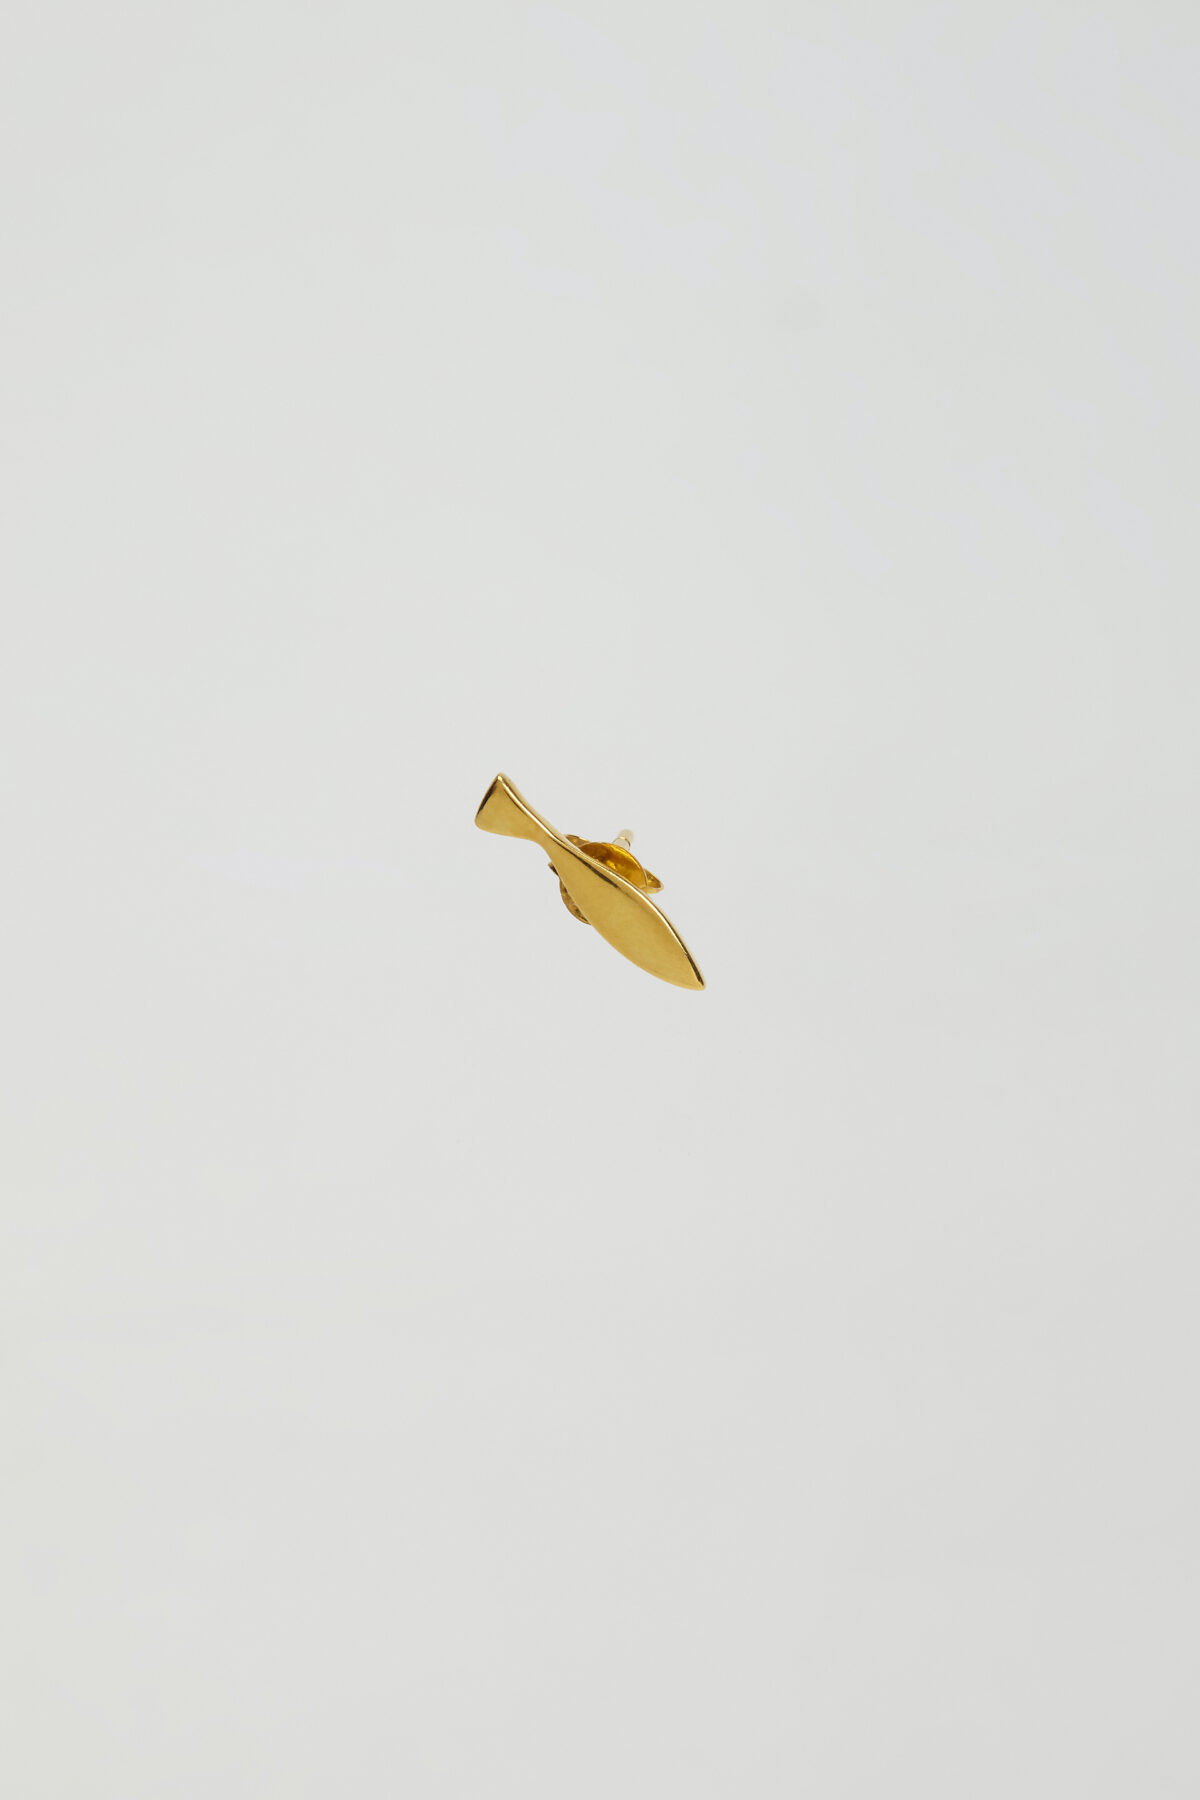 wape-tiny-fish-earring-gold-plated-kimale-matchboxathens